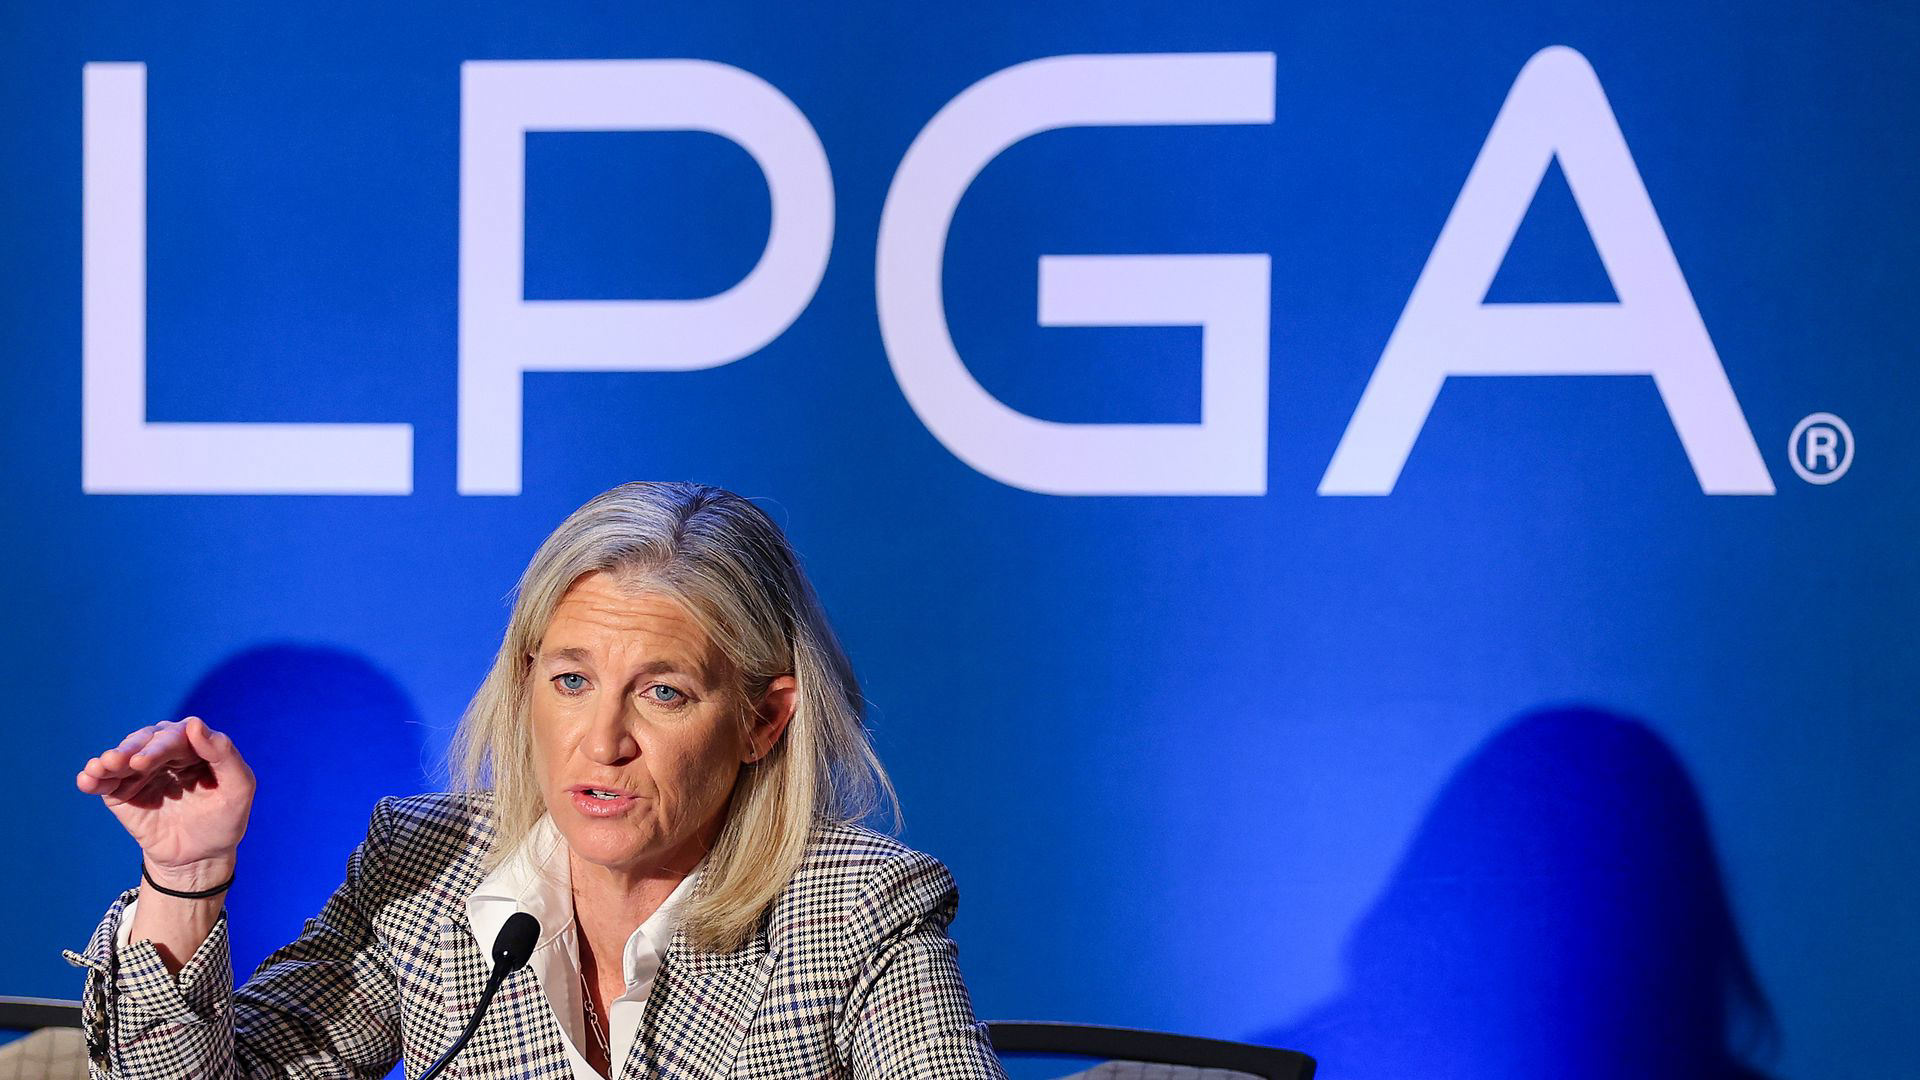 LPGA, ESPN agree on groundbreaking streaming deal through end of 2025